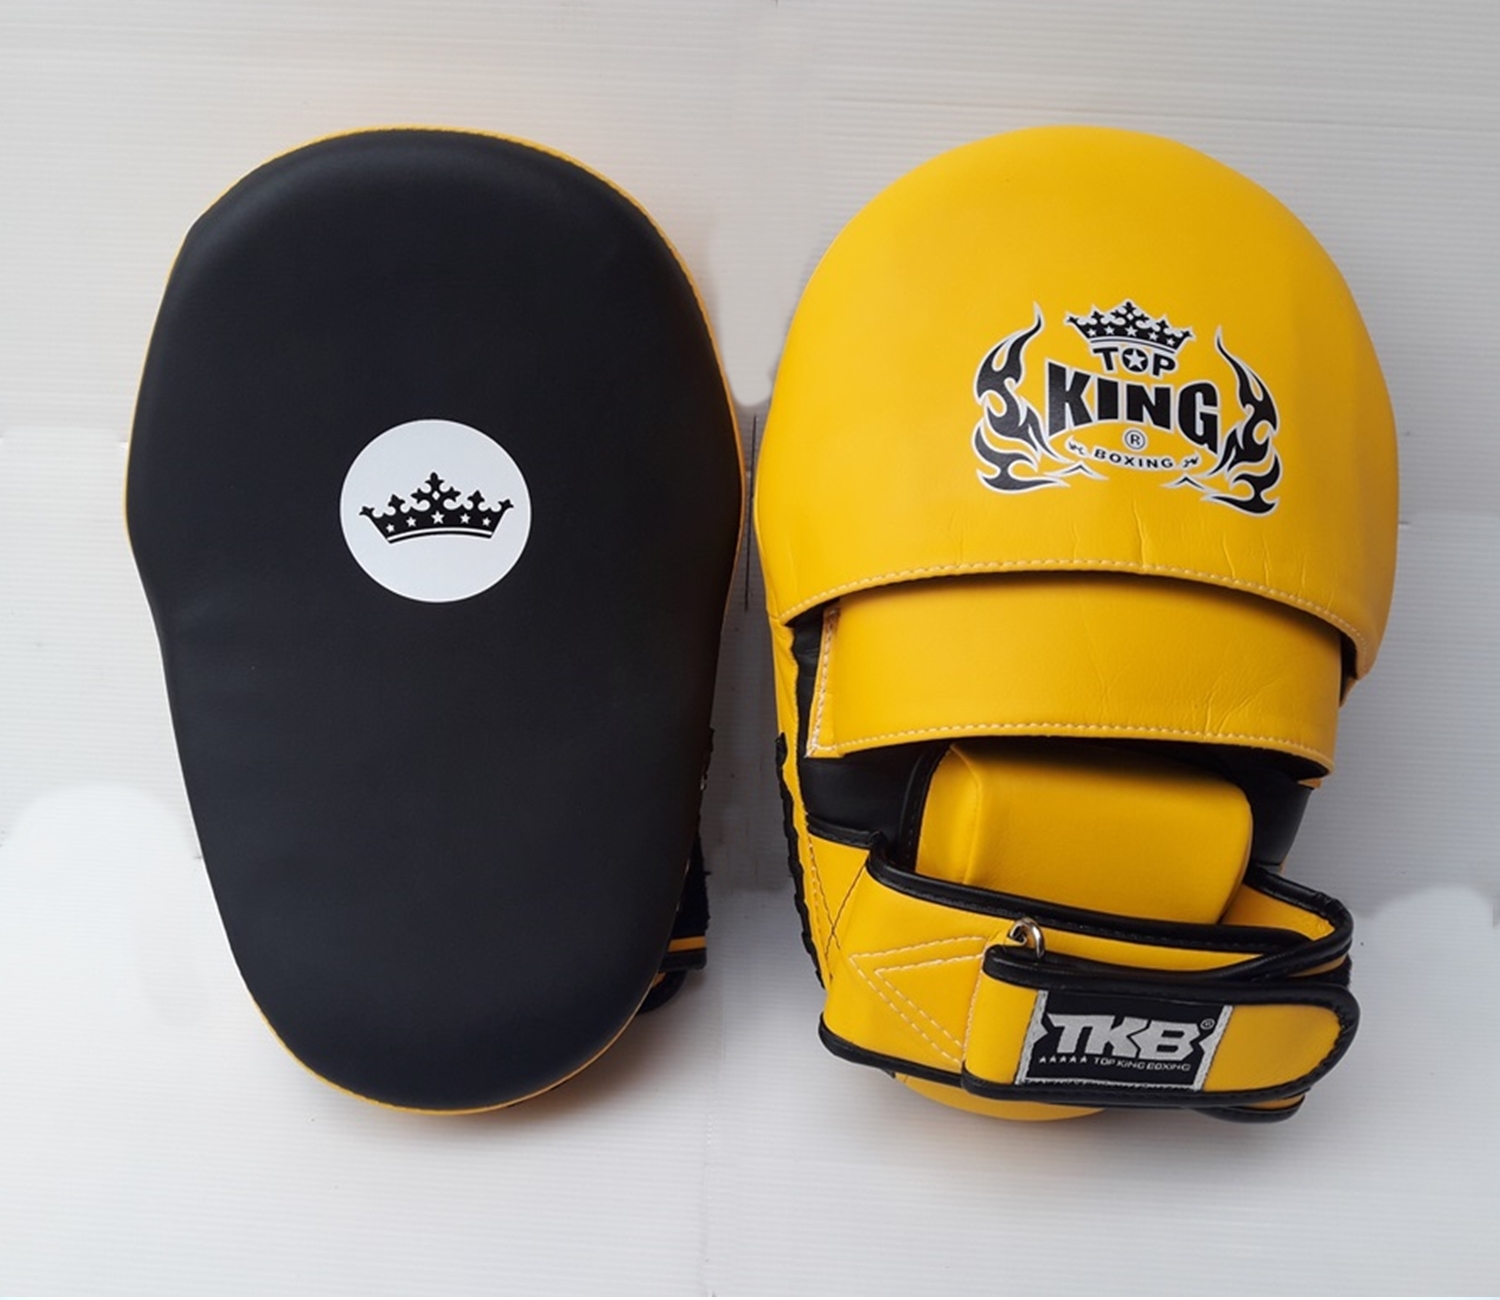 Top King focus mitts TKFME Black-Yellow for Training Muay Thai MMA K1 เป้ามือท็อปคิงส์ แบบโค้ง ดำ-เหลือง สำหรับเทรนเนอร์ ในการฝึกซ้อมนักมวย